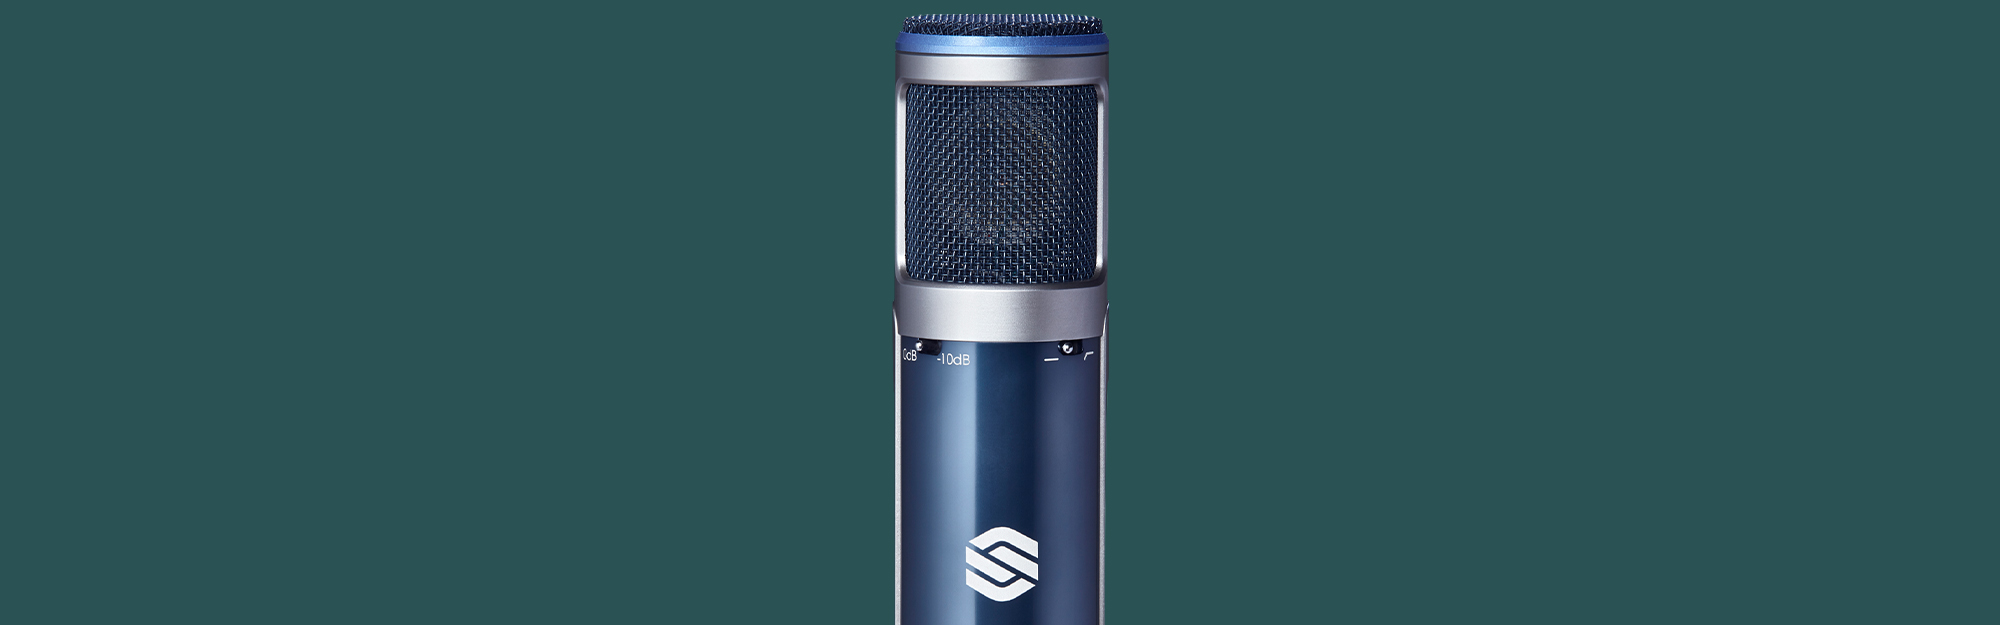 Sterling ST159 studio multi-pattern condenser microphone close up.